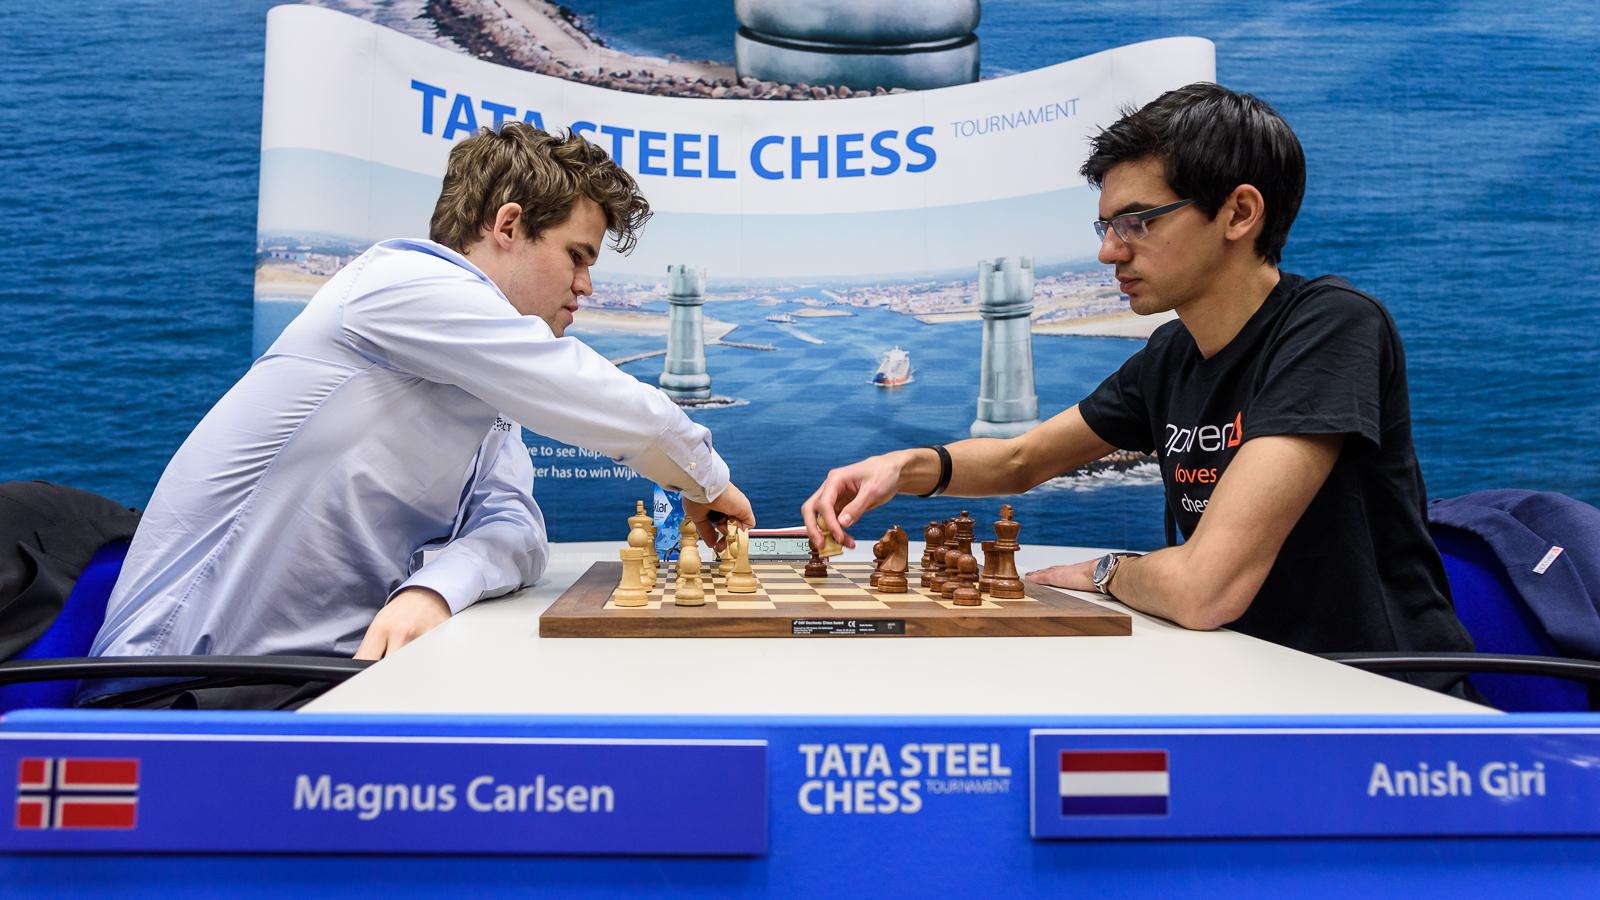 Magnus Carlsen v. Vidit Gujrathi / Oitavas de final / Speed Chess  Championship 2023 